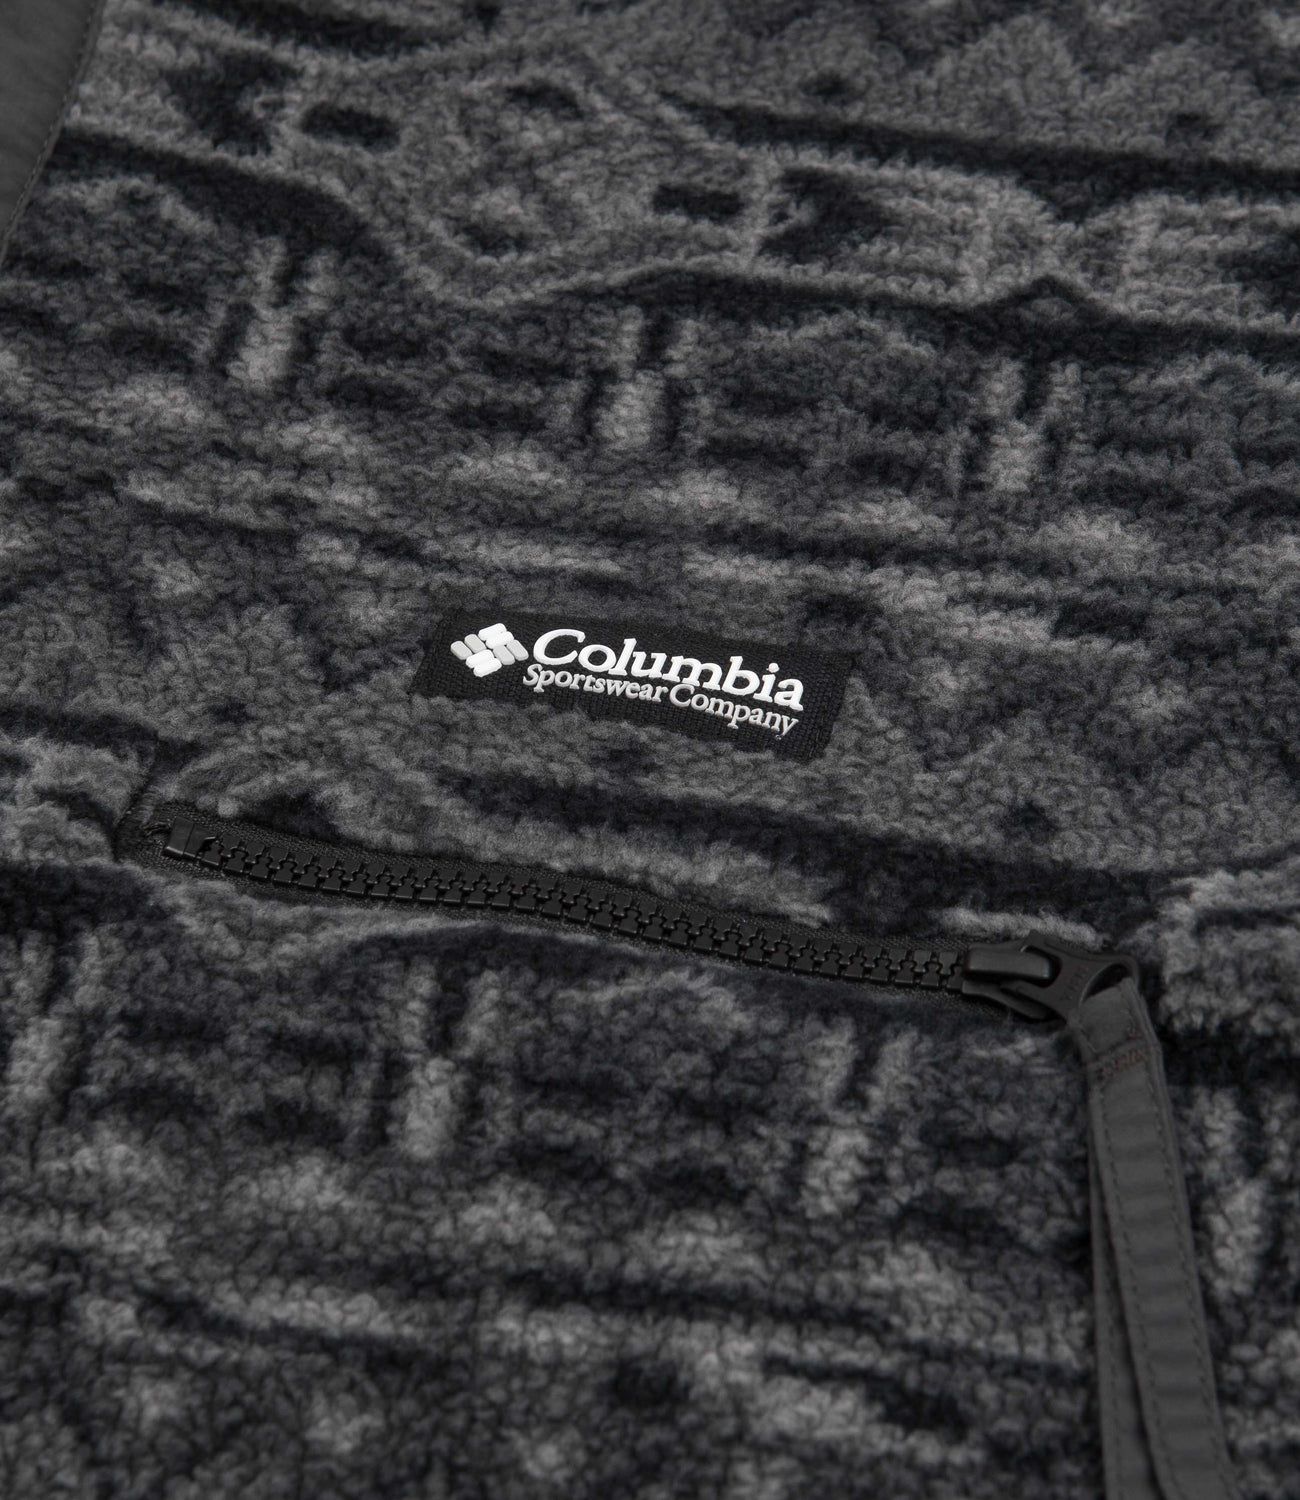 Columbia Helvetia half snap fleece in stone 80s stripe print